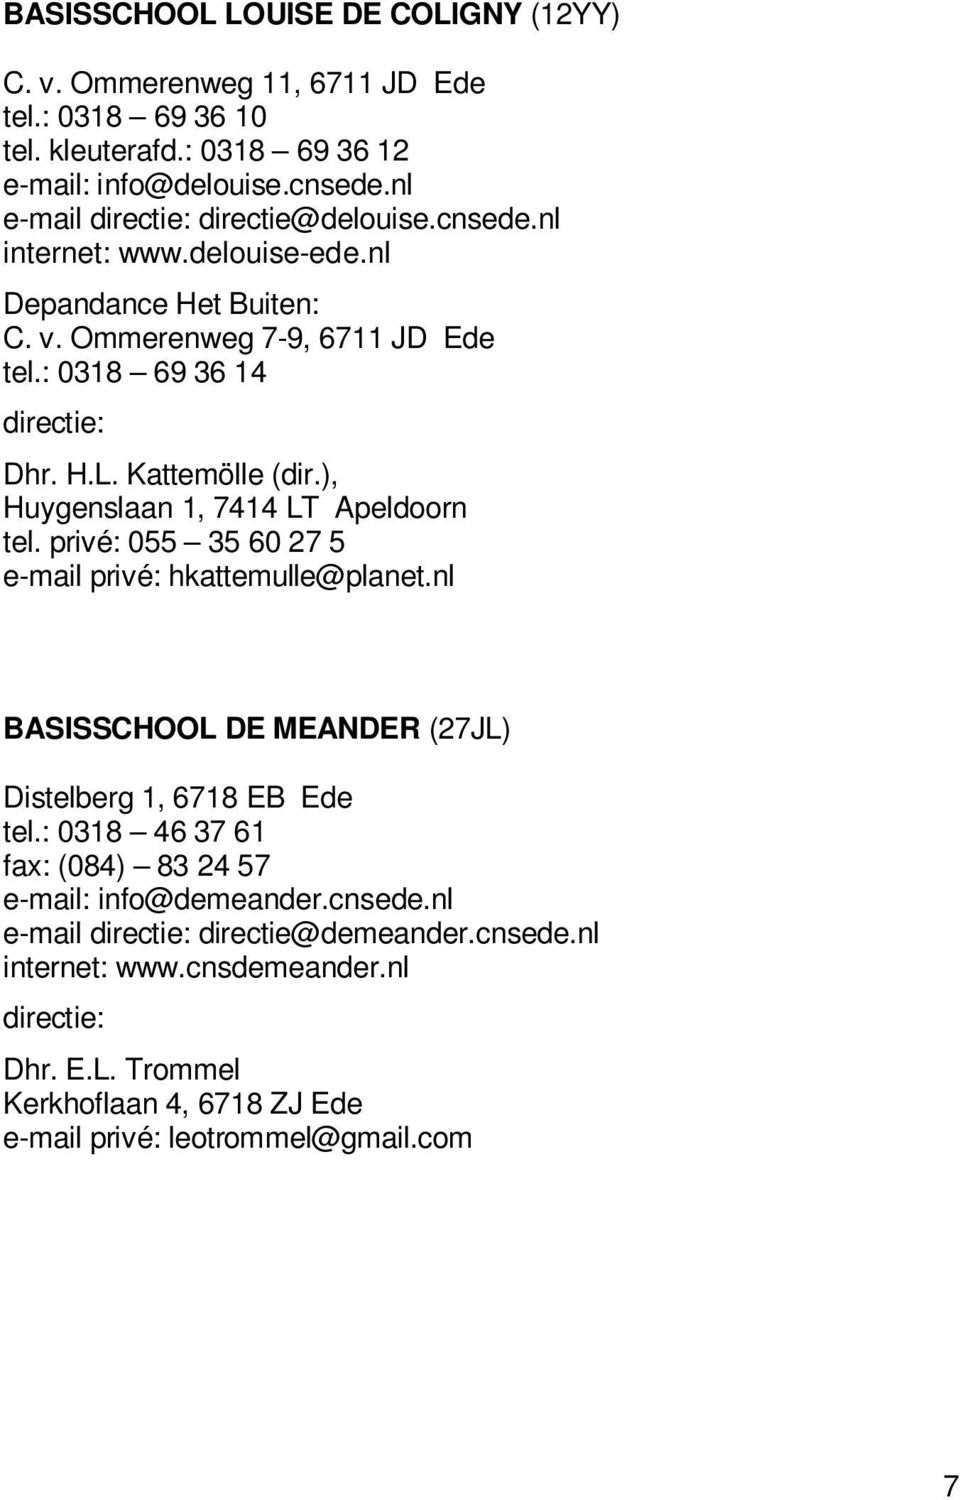 ), Huygenslaan 1, 7414 LT Apeldoorn tel. privé: 055 35 60 27 5 e-mail privé: hkattemulle@planet.nl BASISSCHOOL DE MEANDER (27JL) Distelberg 1, 6718 EB Ede tel.